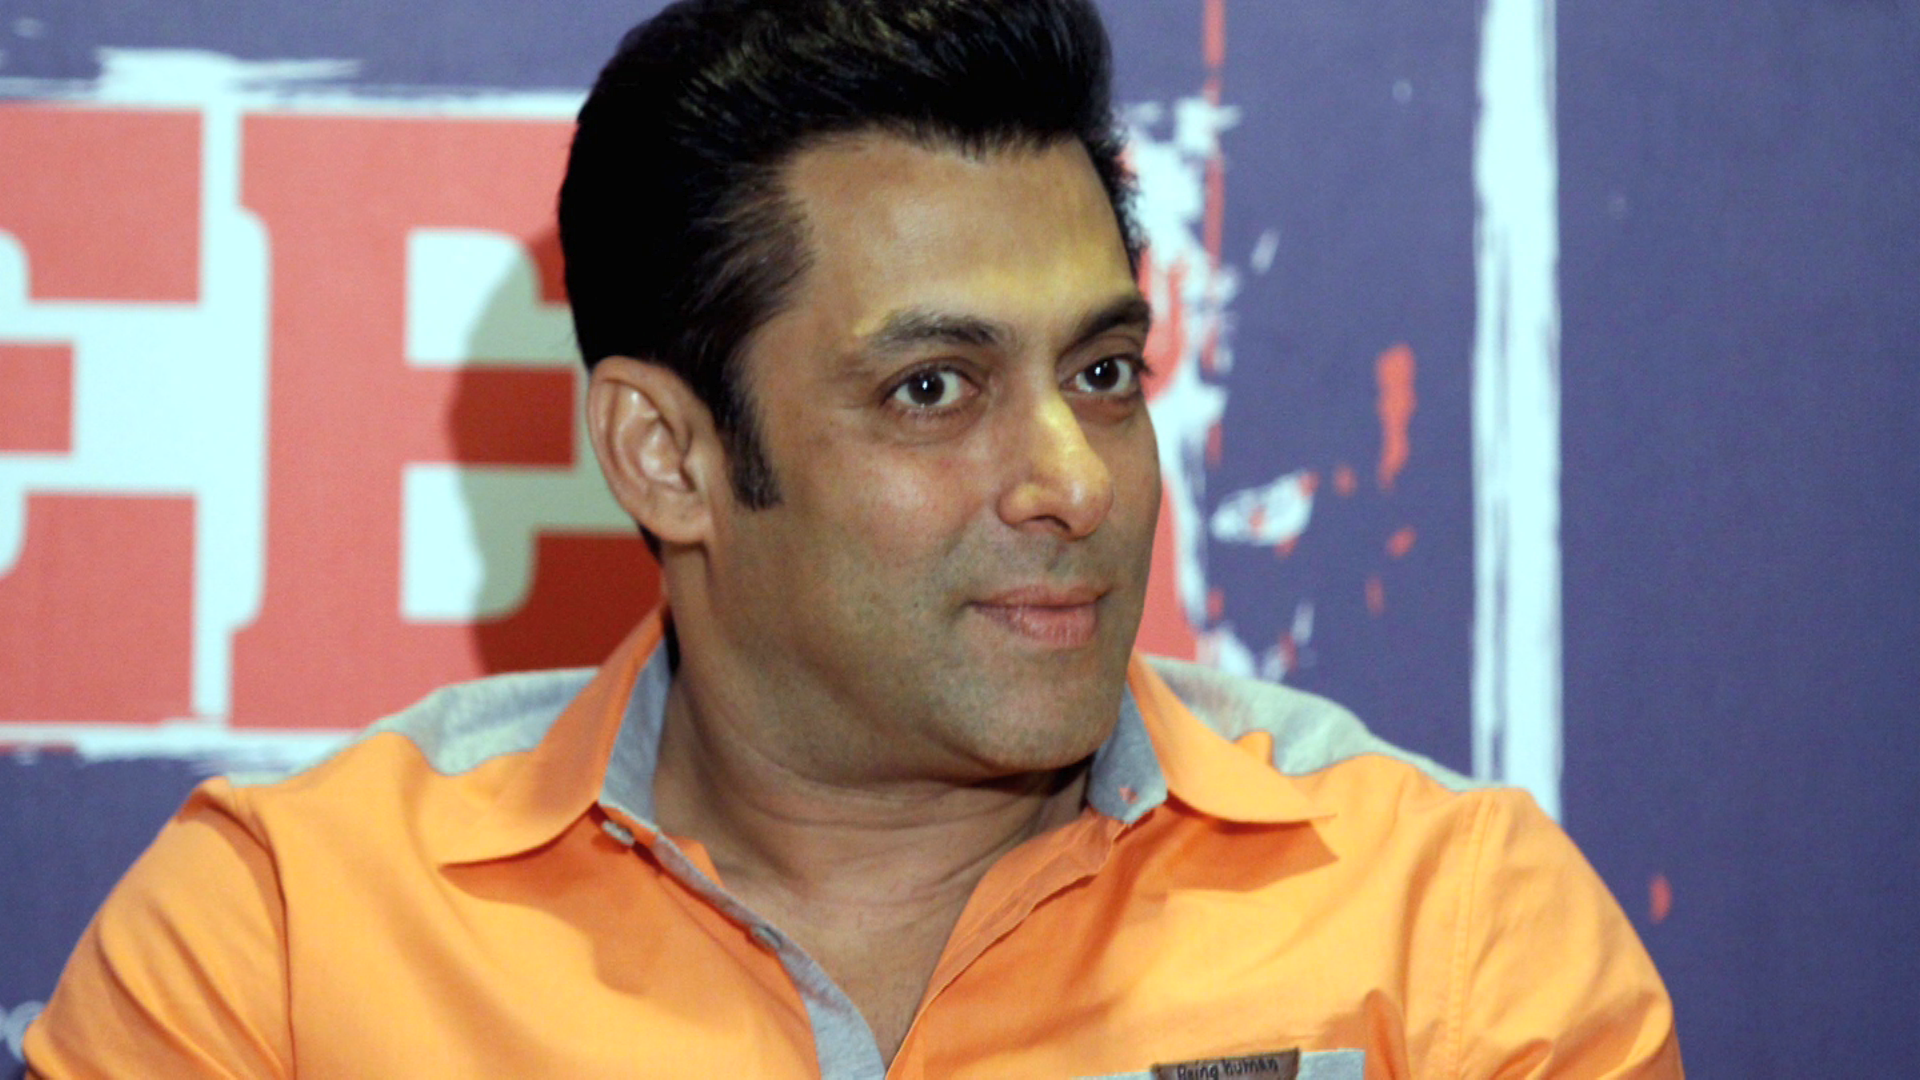 Salman Khan Sexxx - Salman Khan's conviction in fatal hit-and-run tossed | CNN